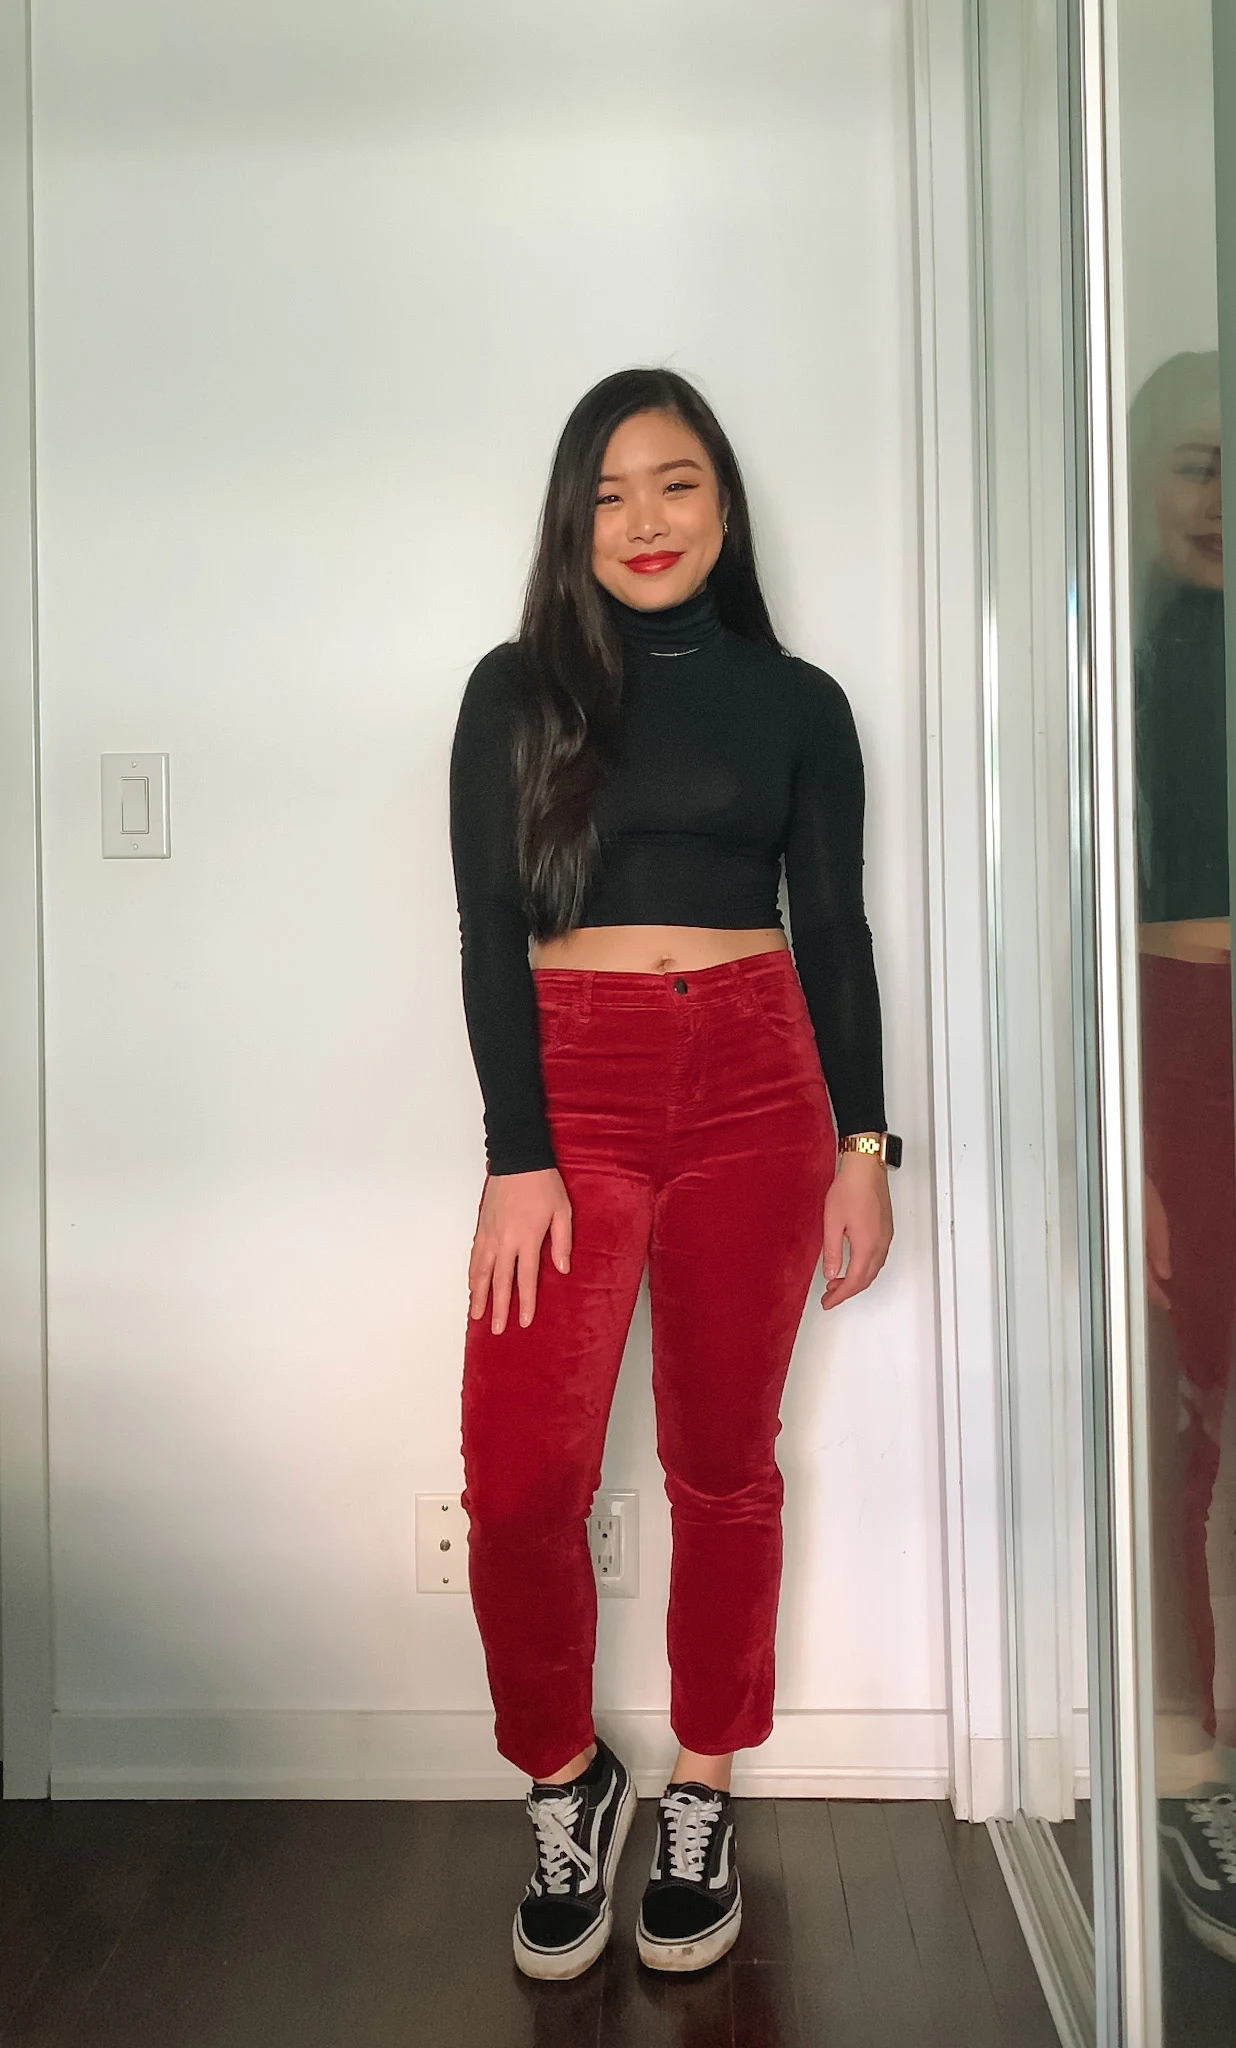 Lunar New Year & Chinese New Year outfit ideas | Aritzia black cropped turtleneck + J Brand corduroy red pants + black Vans Old Skool sneakers